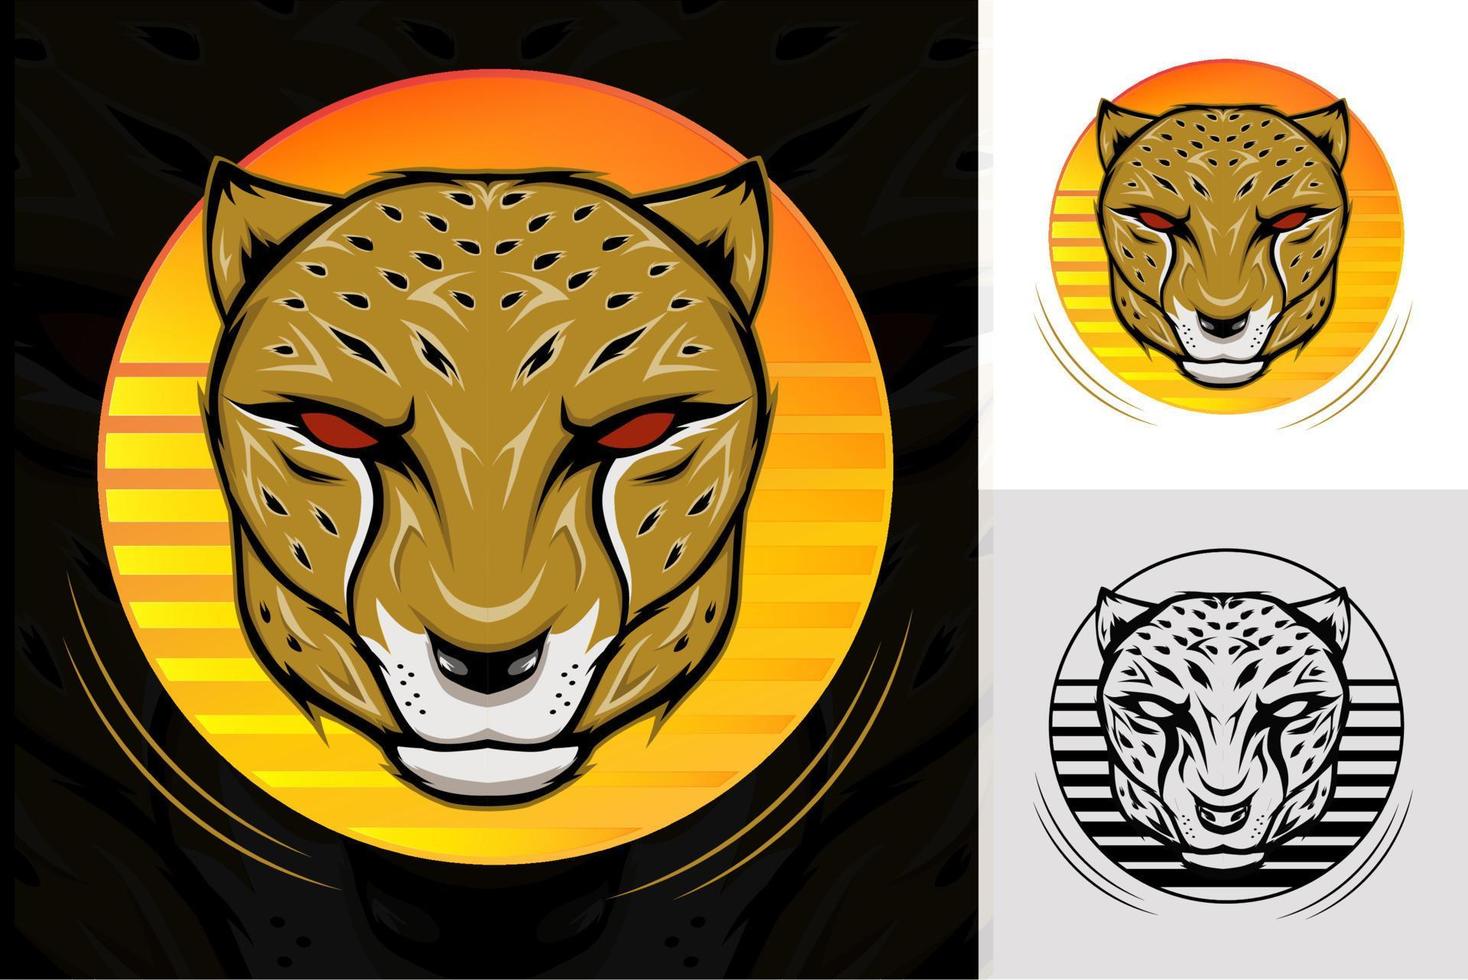 Cheetah mascot sport logo design Royalty Free Vector Image